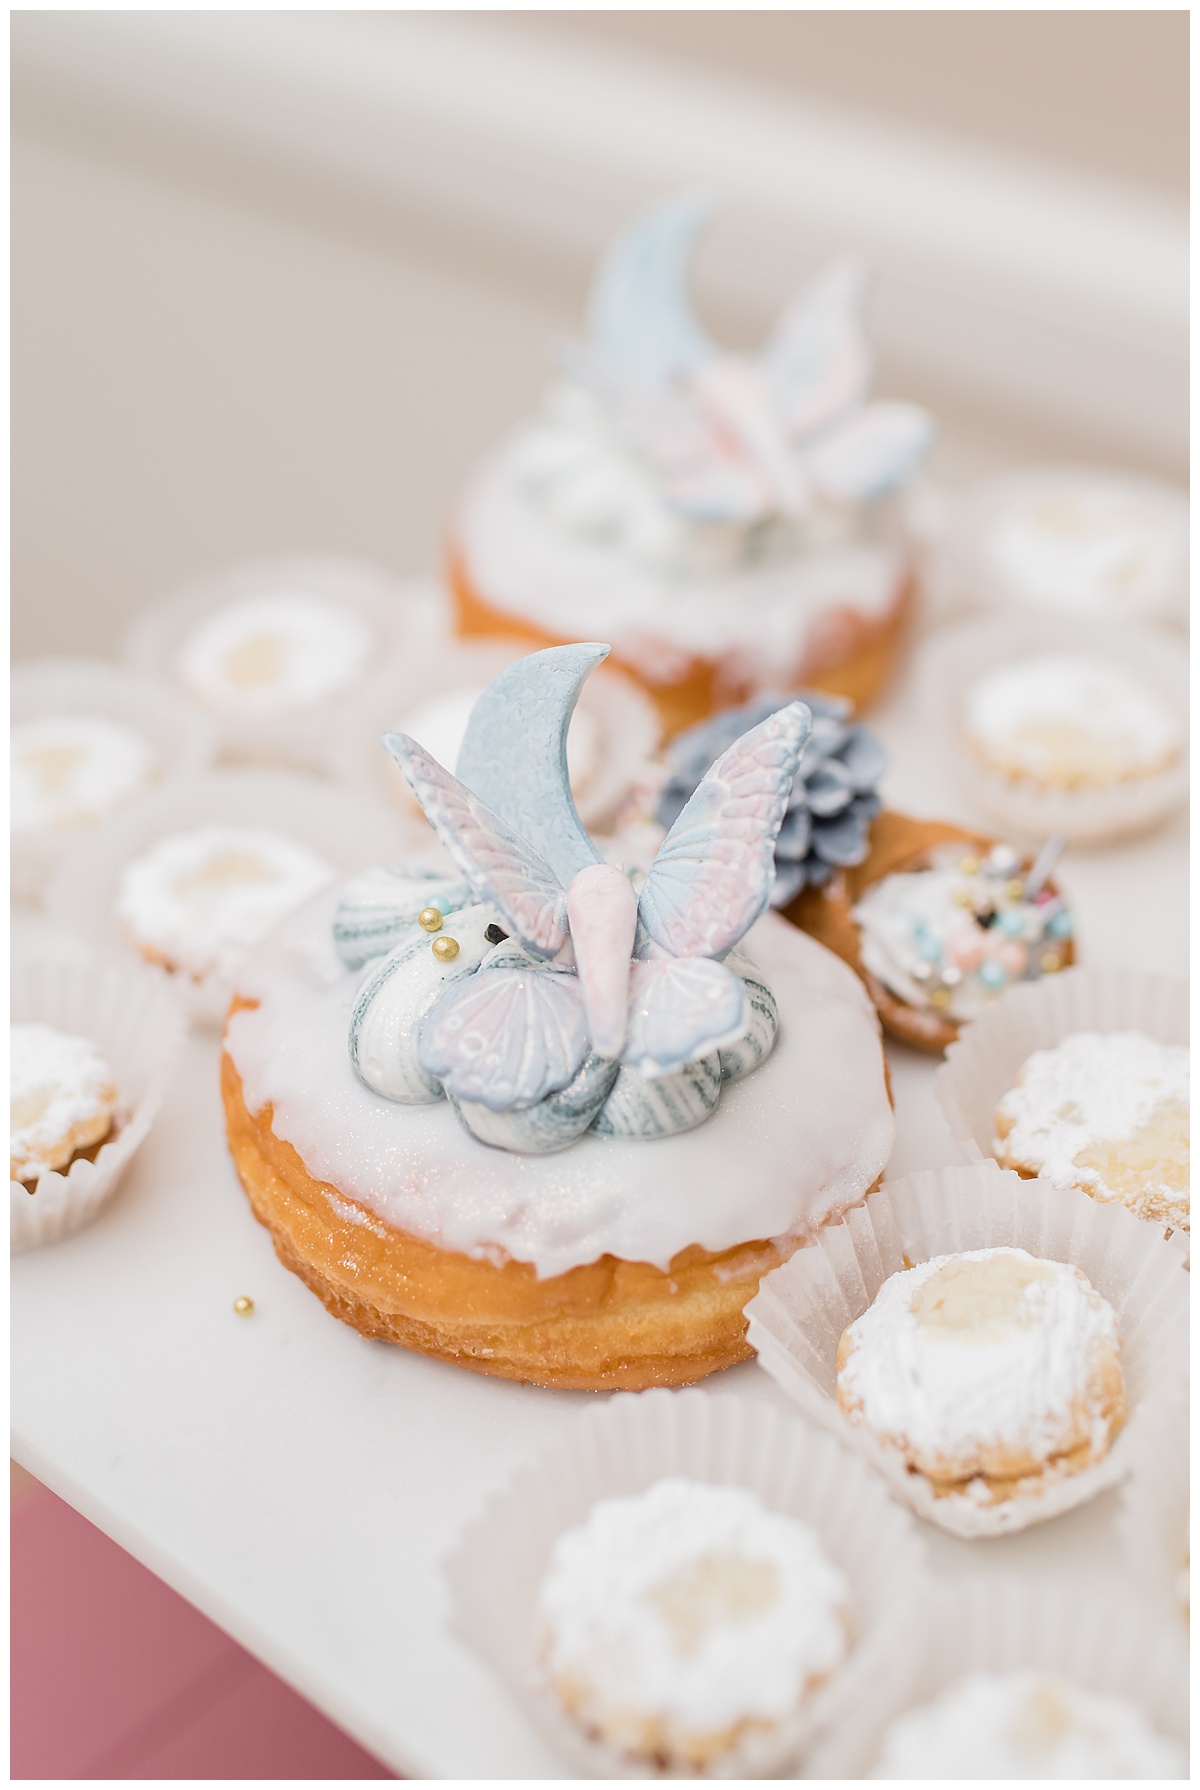 👑 Royal themed birthday cake - Elisa's Wonder Pastries